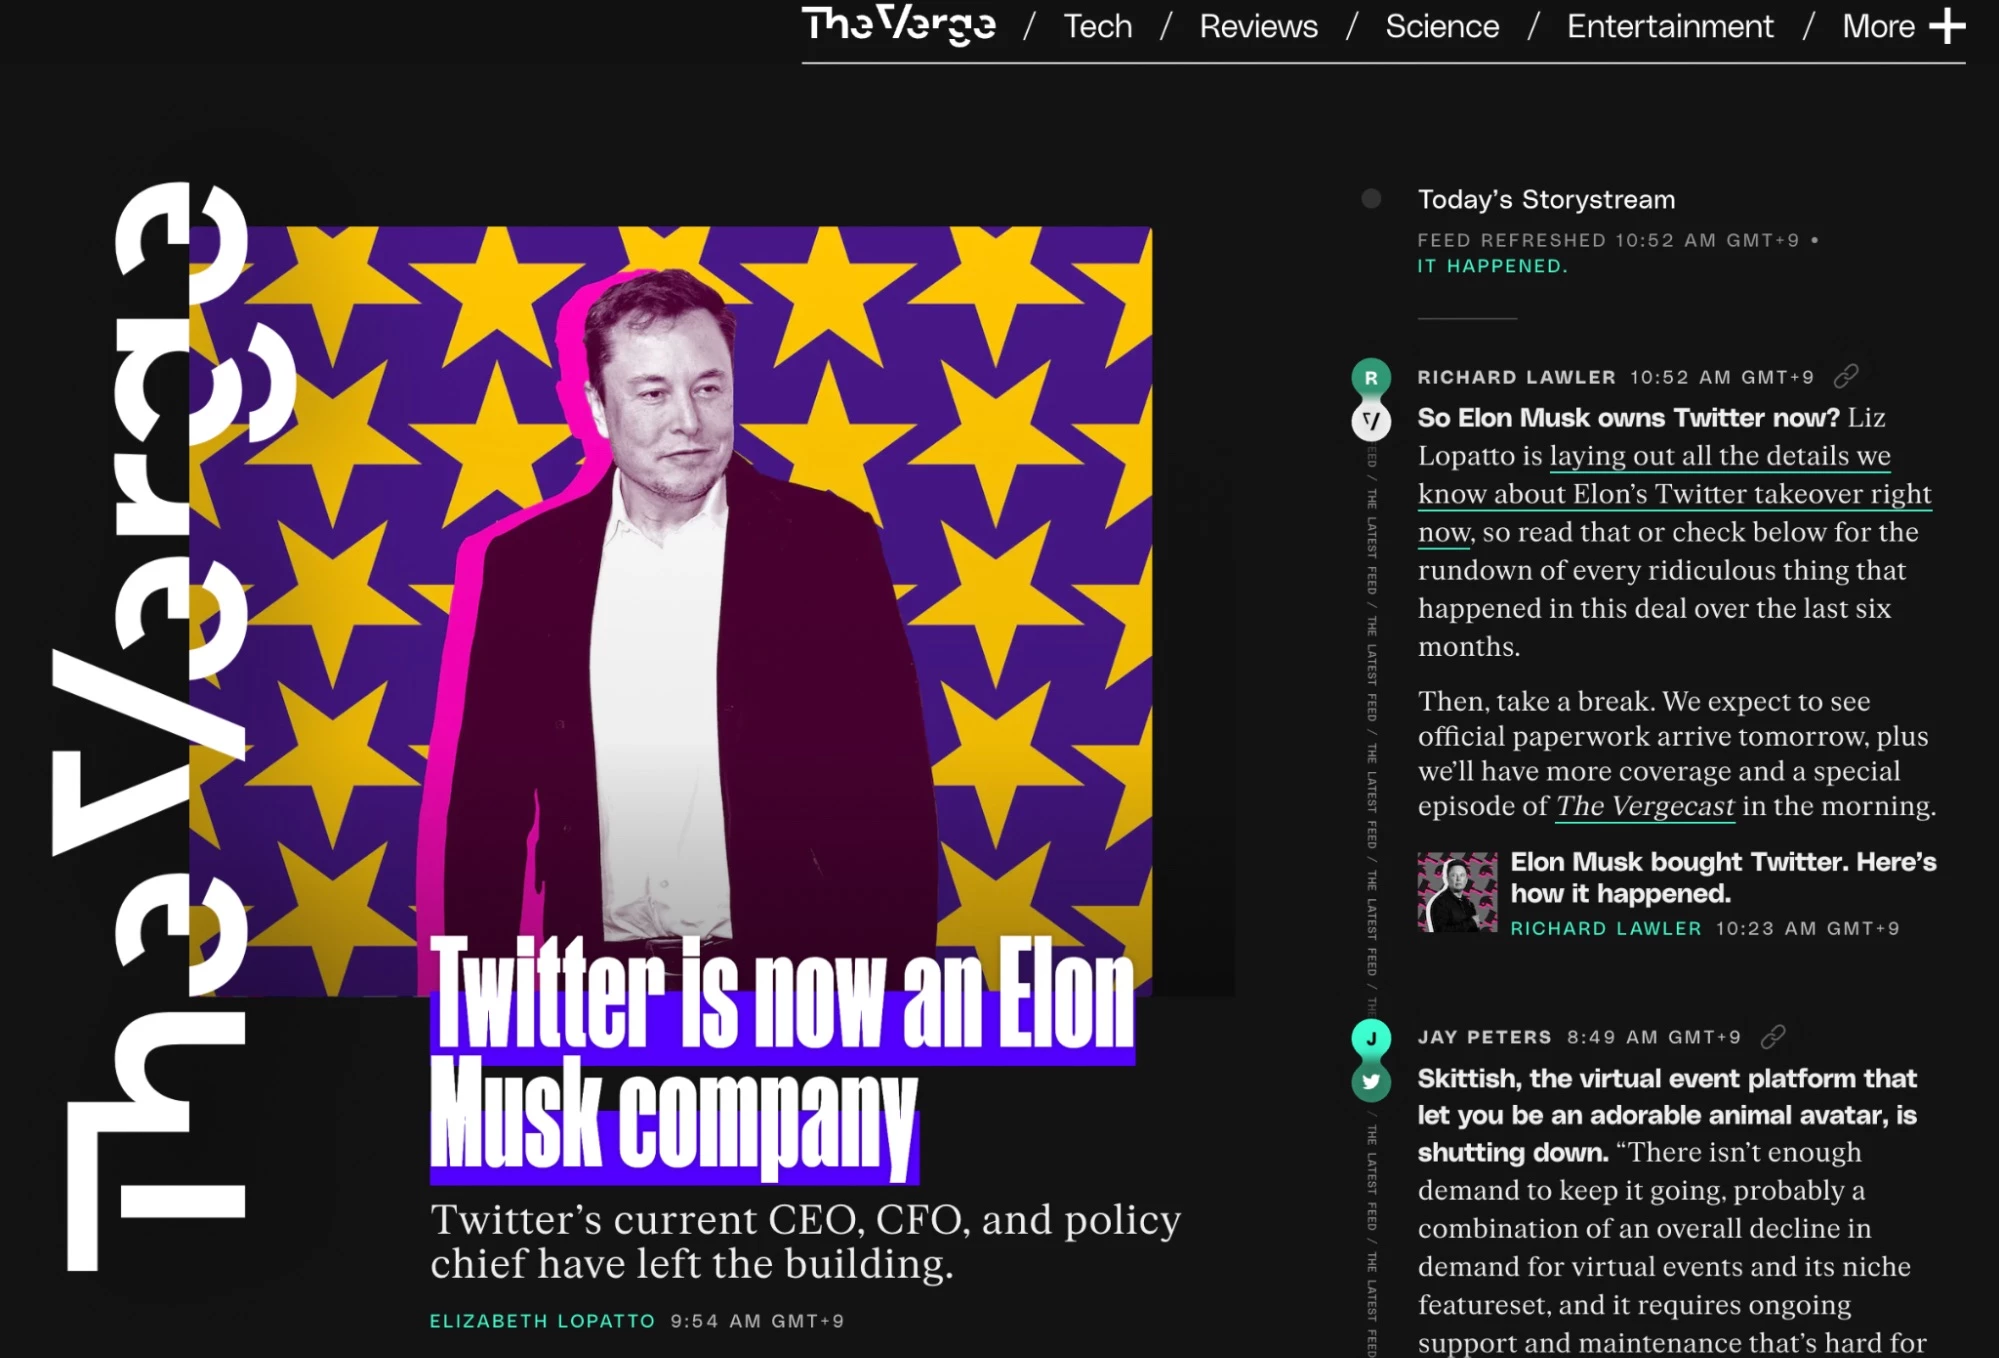 The Verge homepage